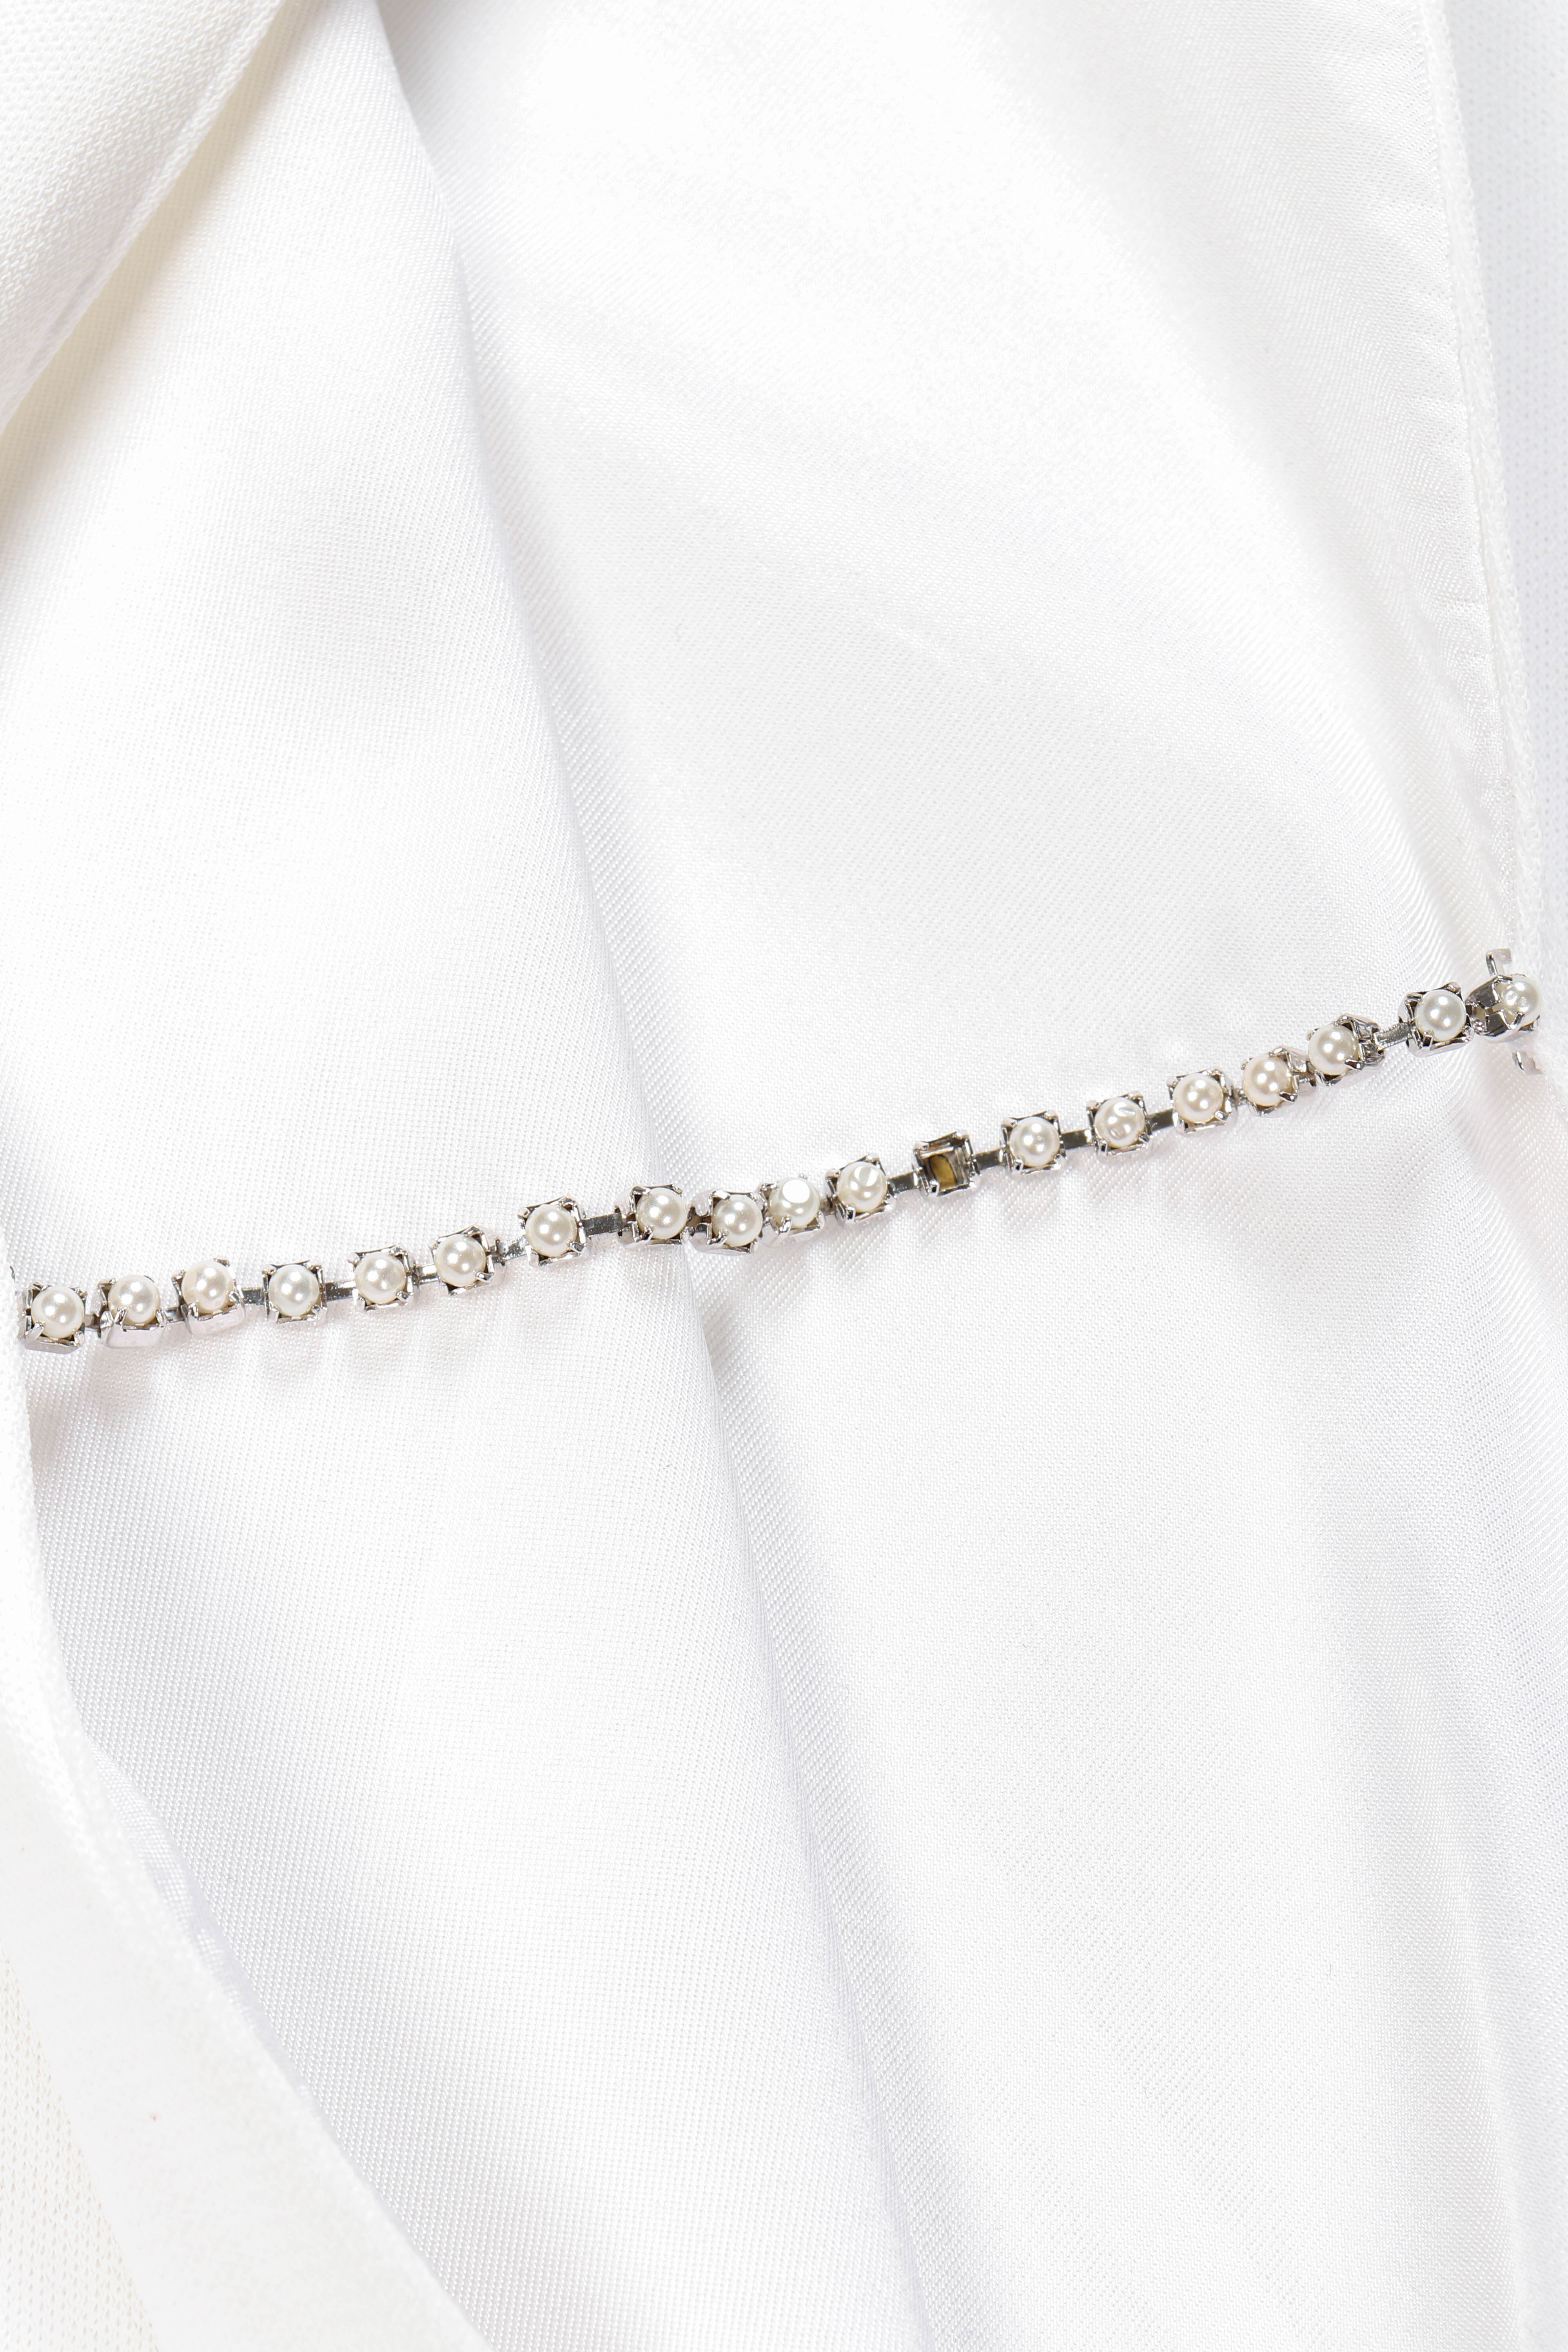 Vintage Versus Gianni Versace Crystal Cutout Sheath Dress rhinestone chain closeup @recessla